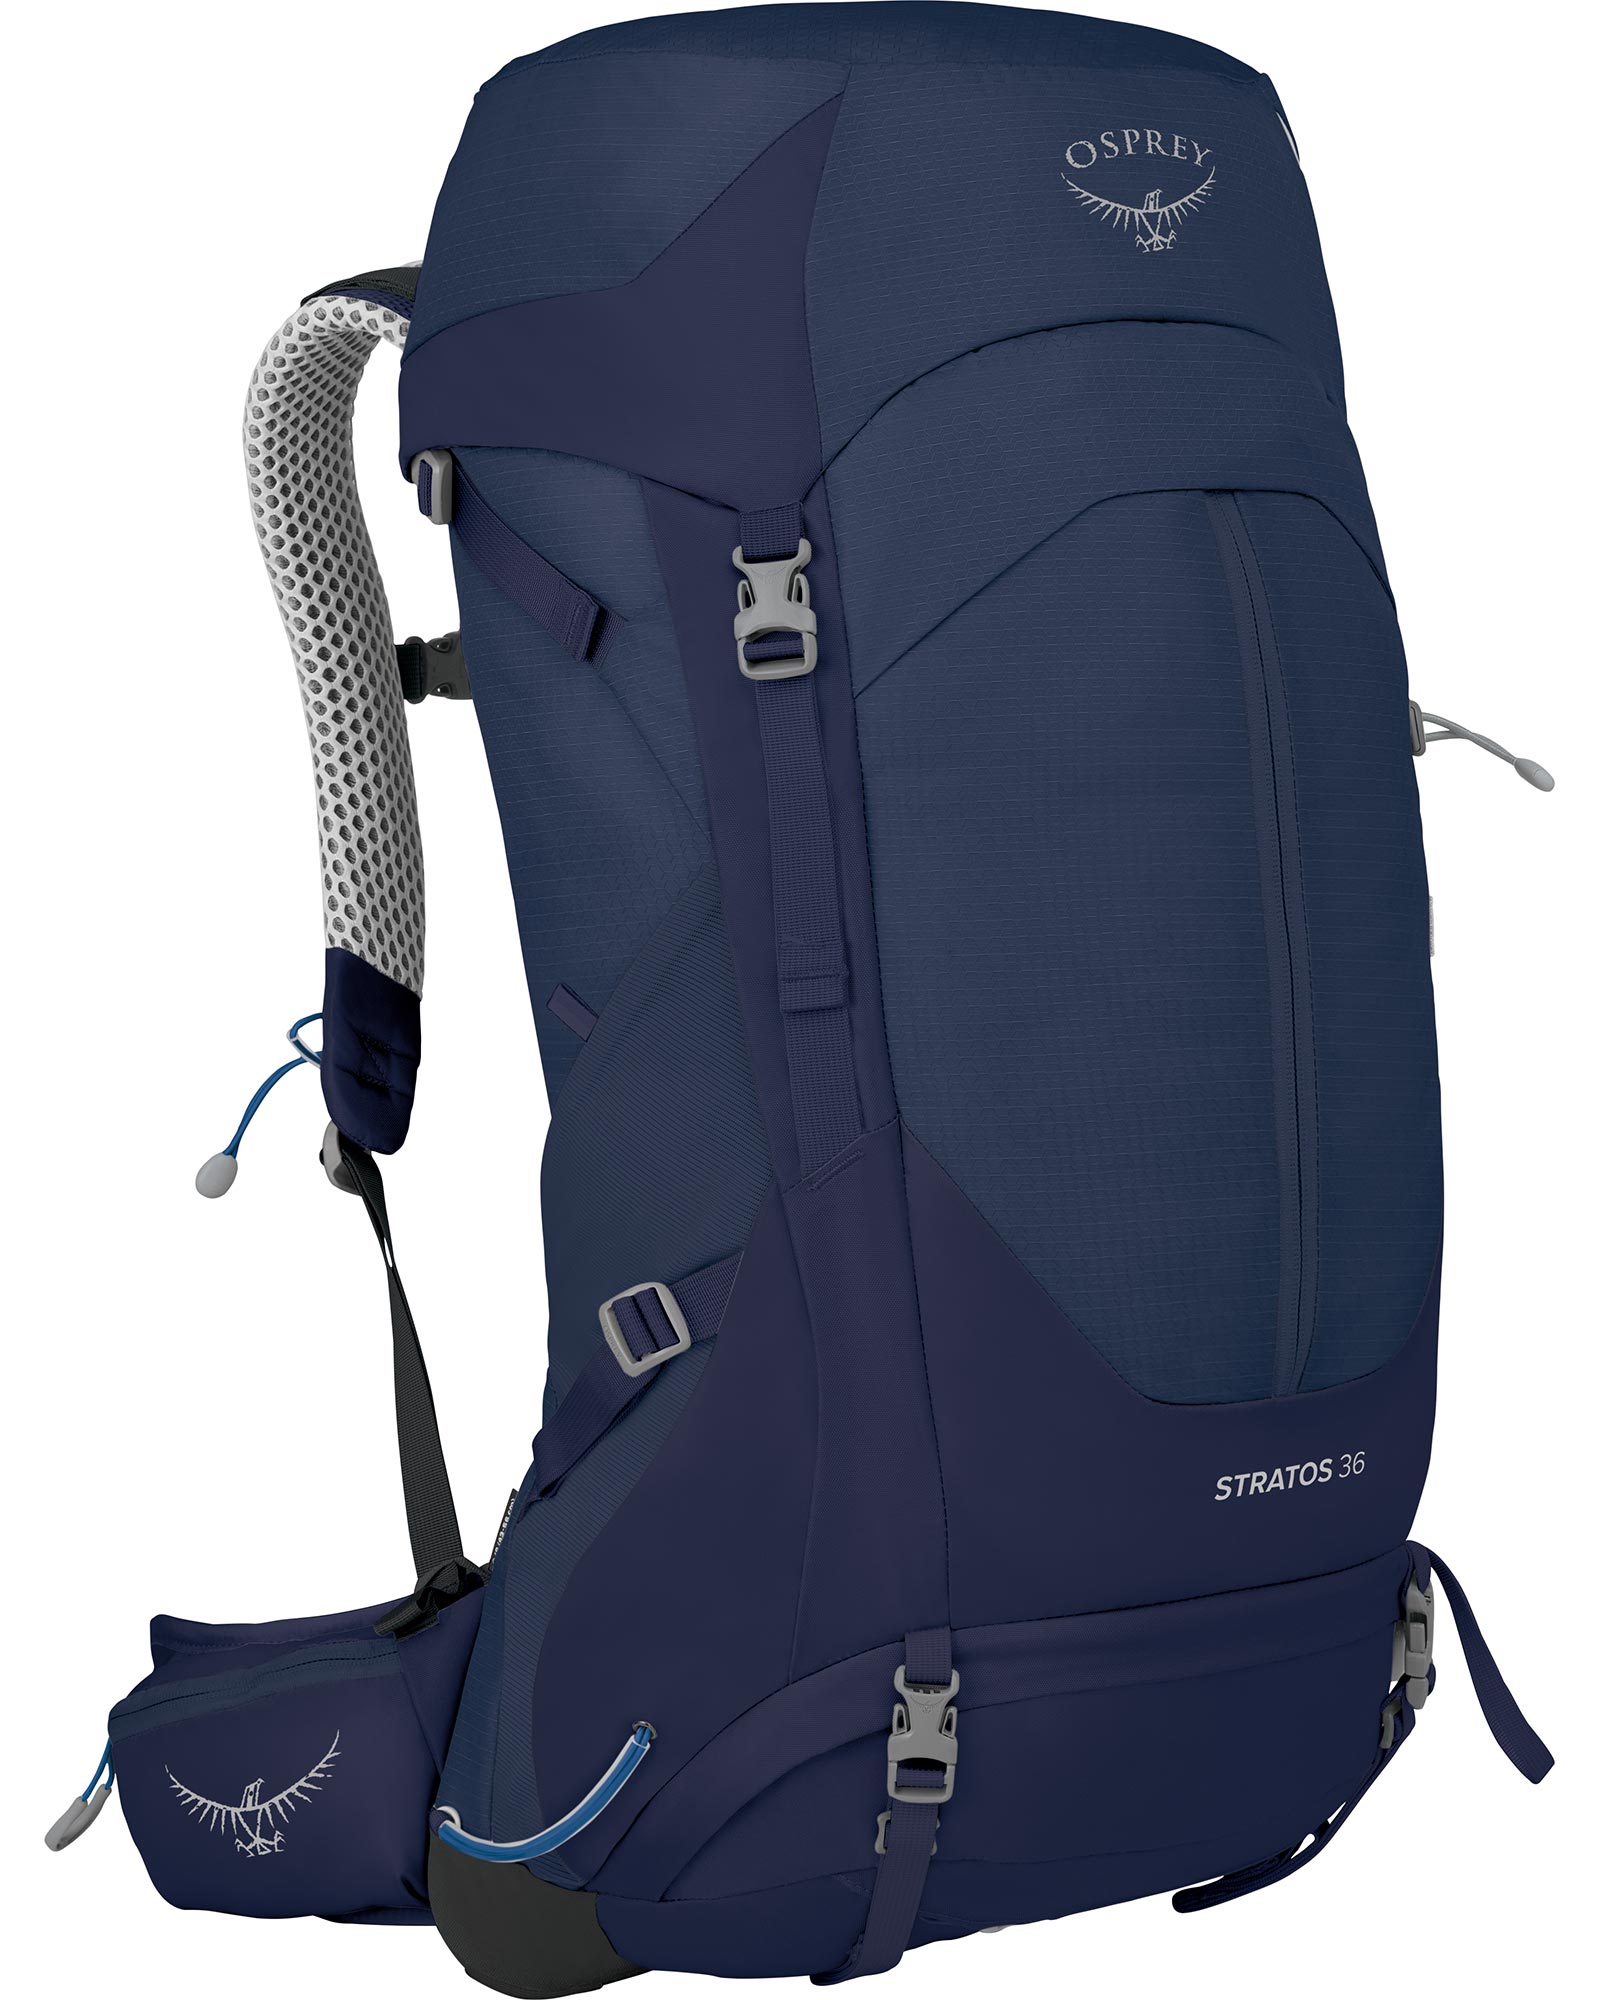 Osprey Stratos 36 Backpack - Cetacean Blue